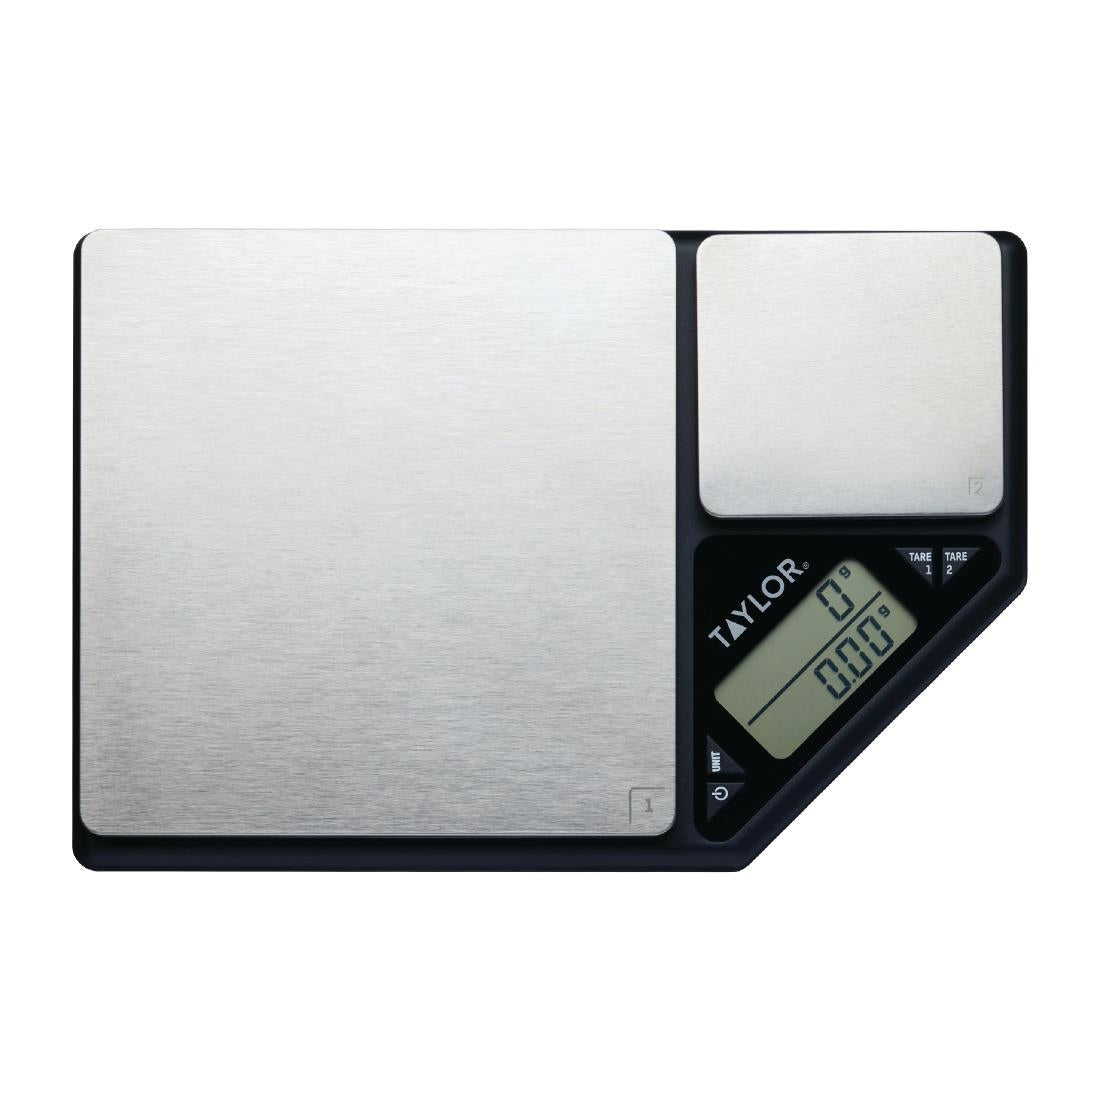 FS591 Taylor Pro Dual Platform Digital Kitchen Scale 5kg/500g JD Catering Equipment Solutions Ltd